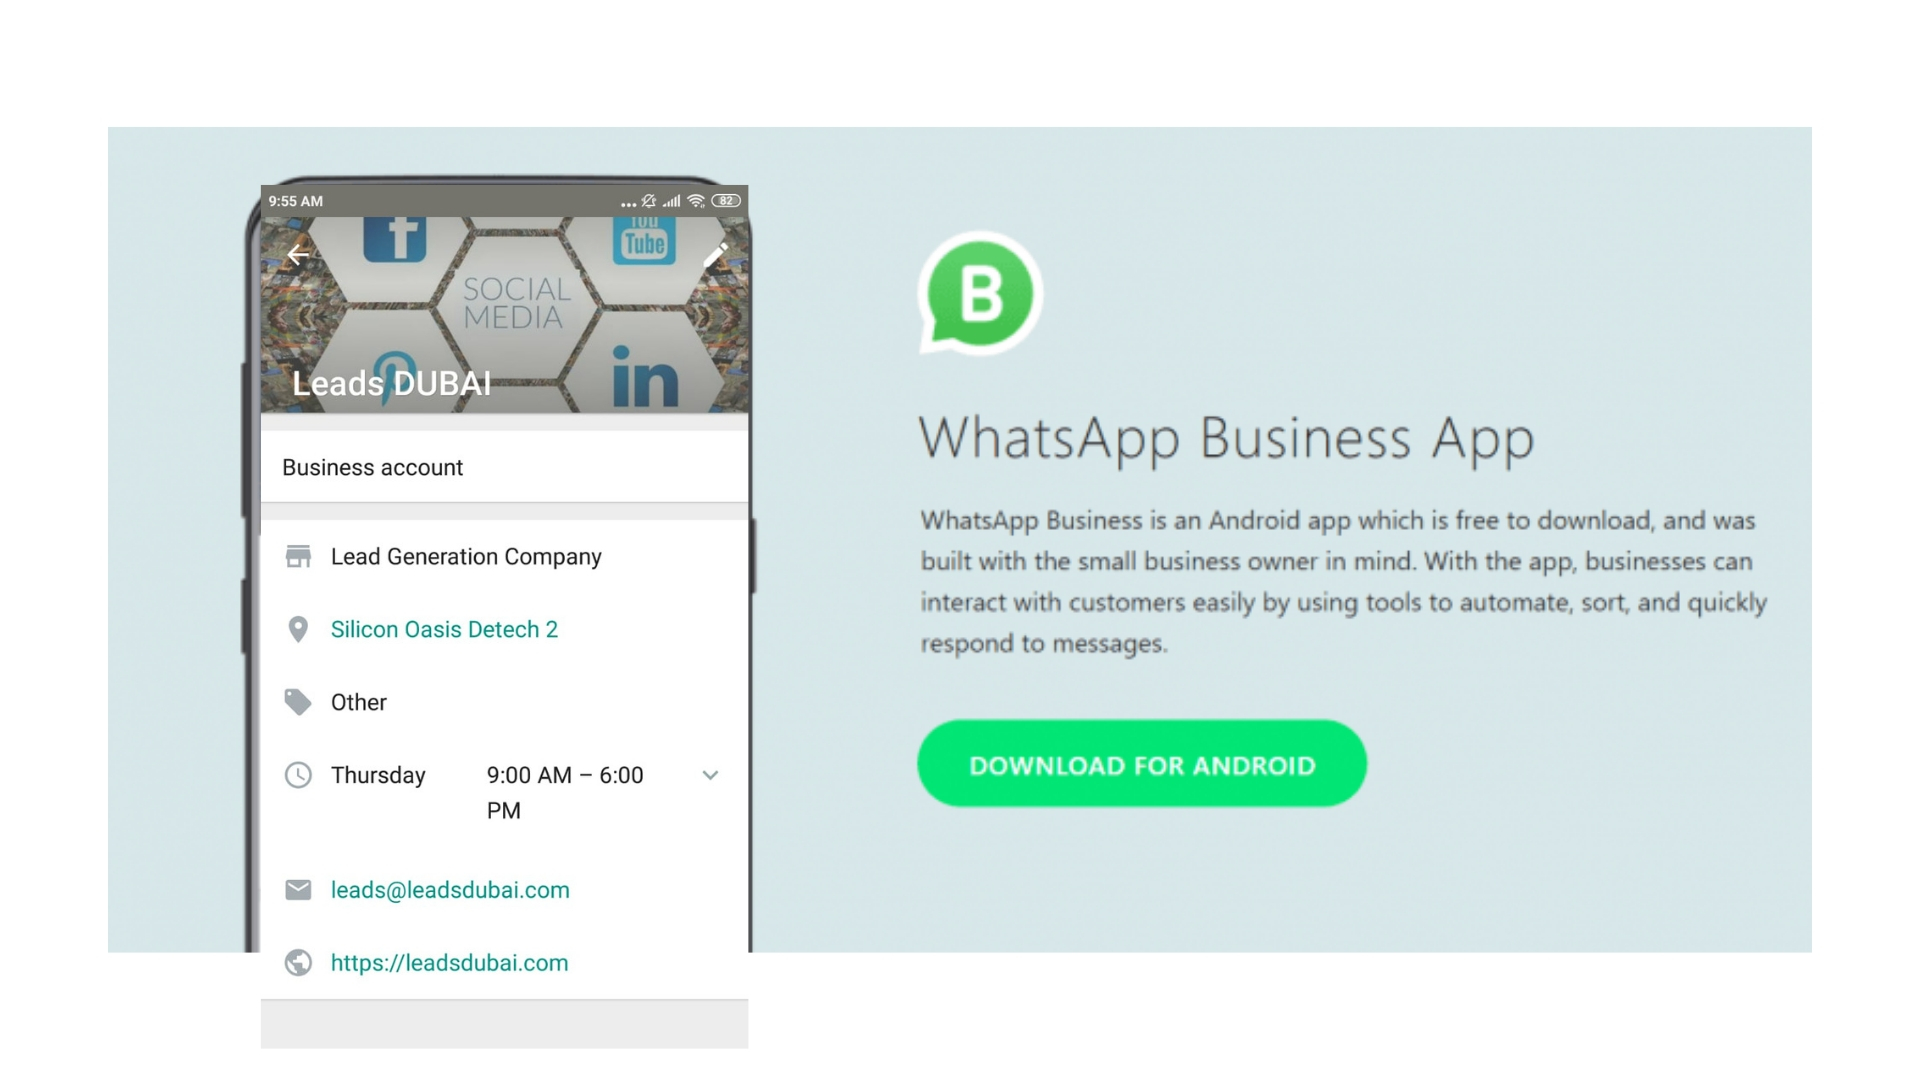 creating a whatsapp business account